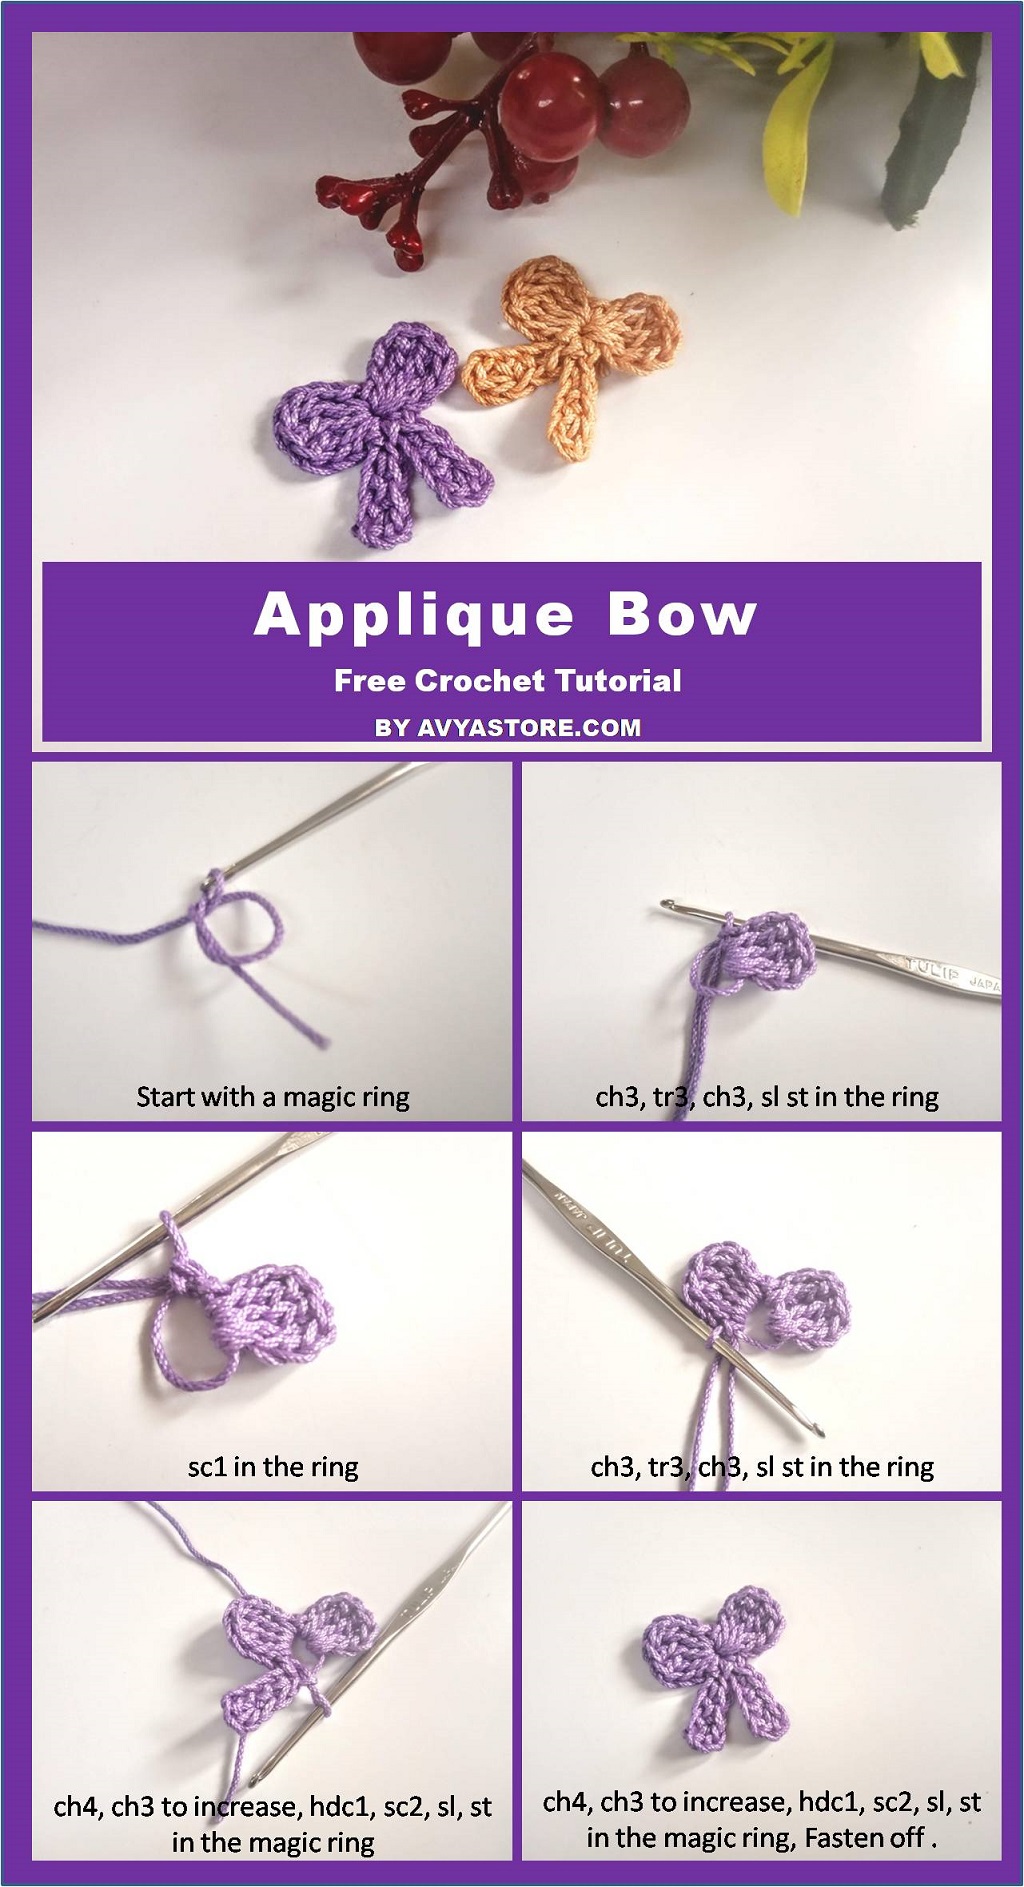 Applique Bow – Free Crochet Tutorial